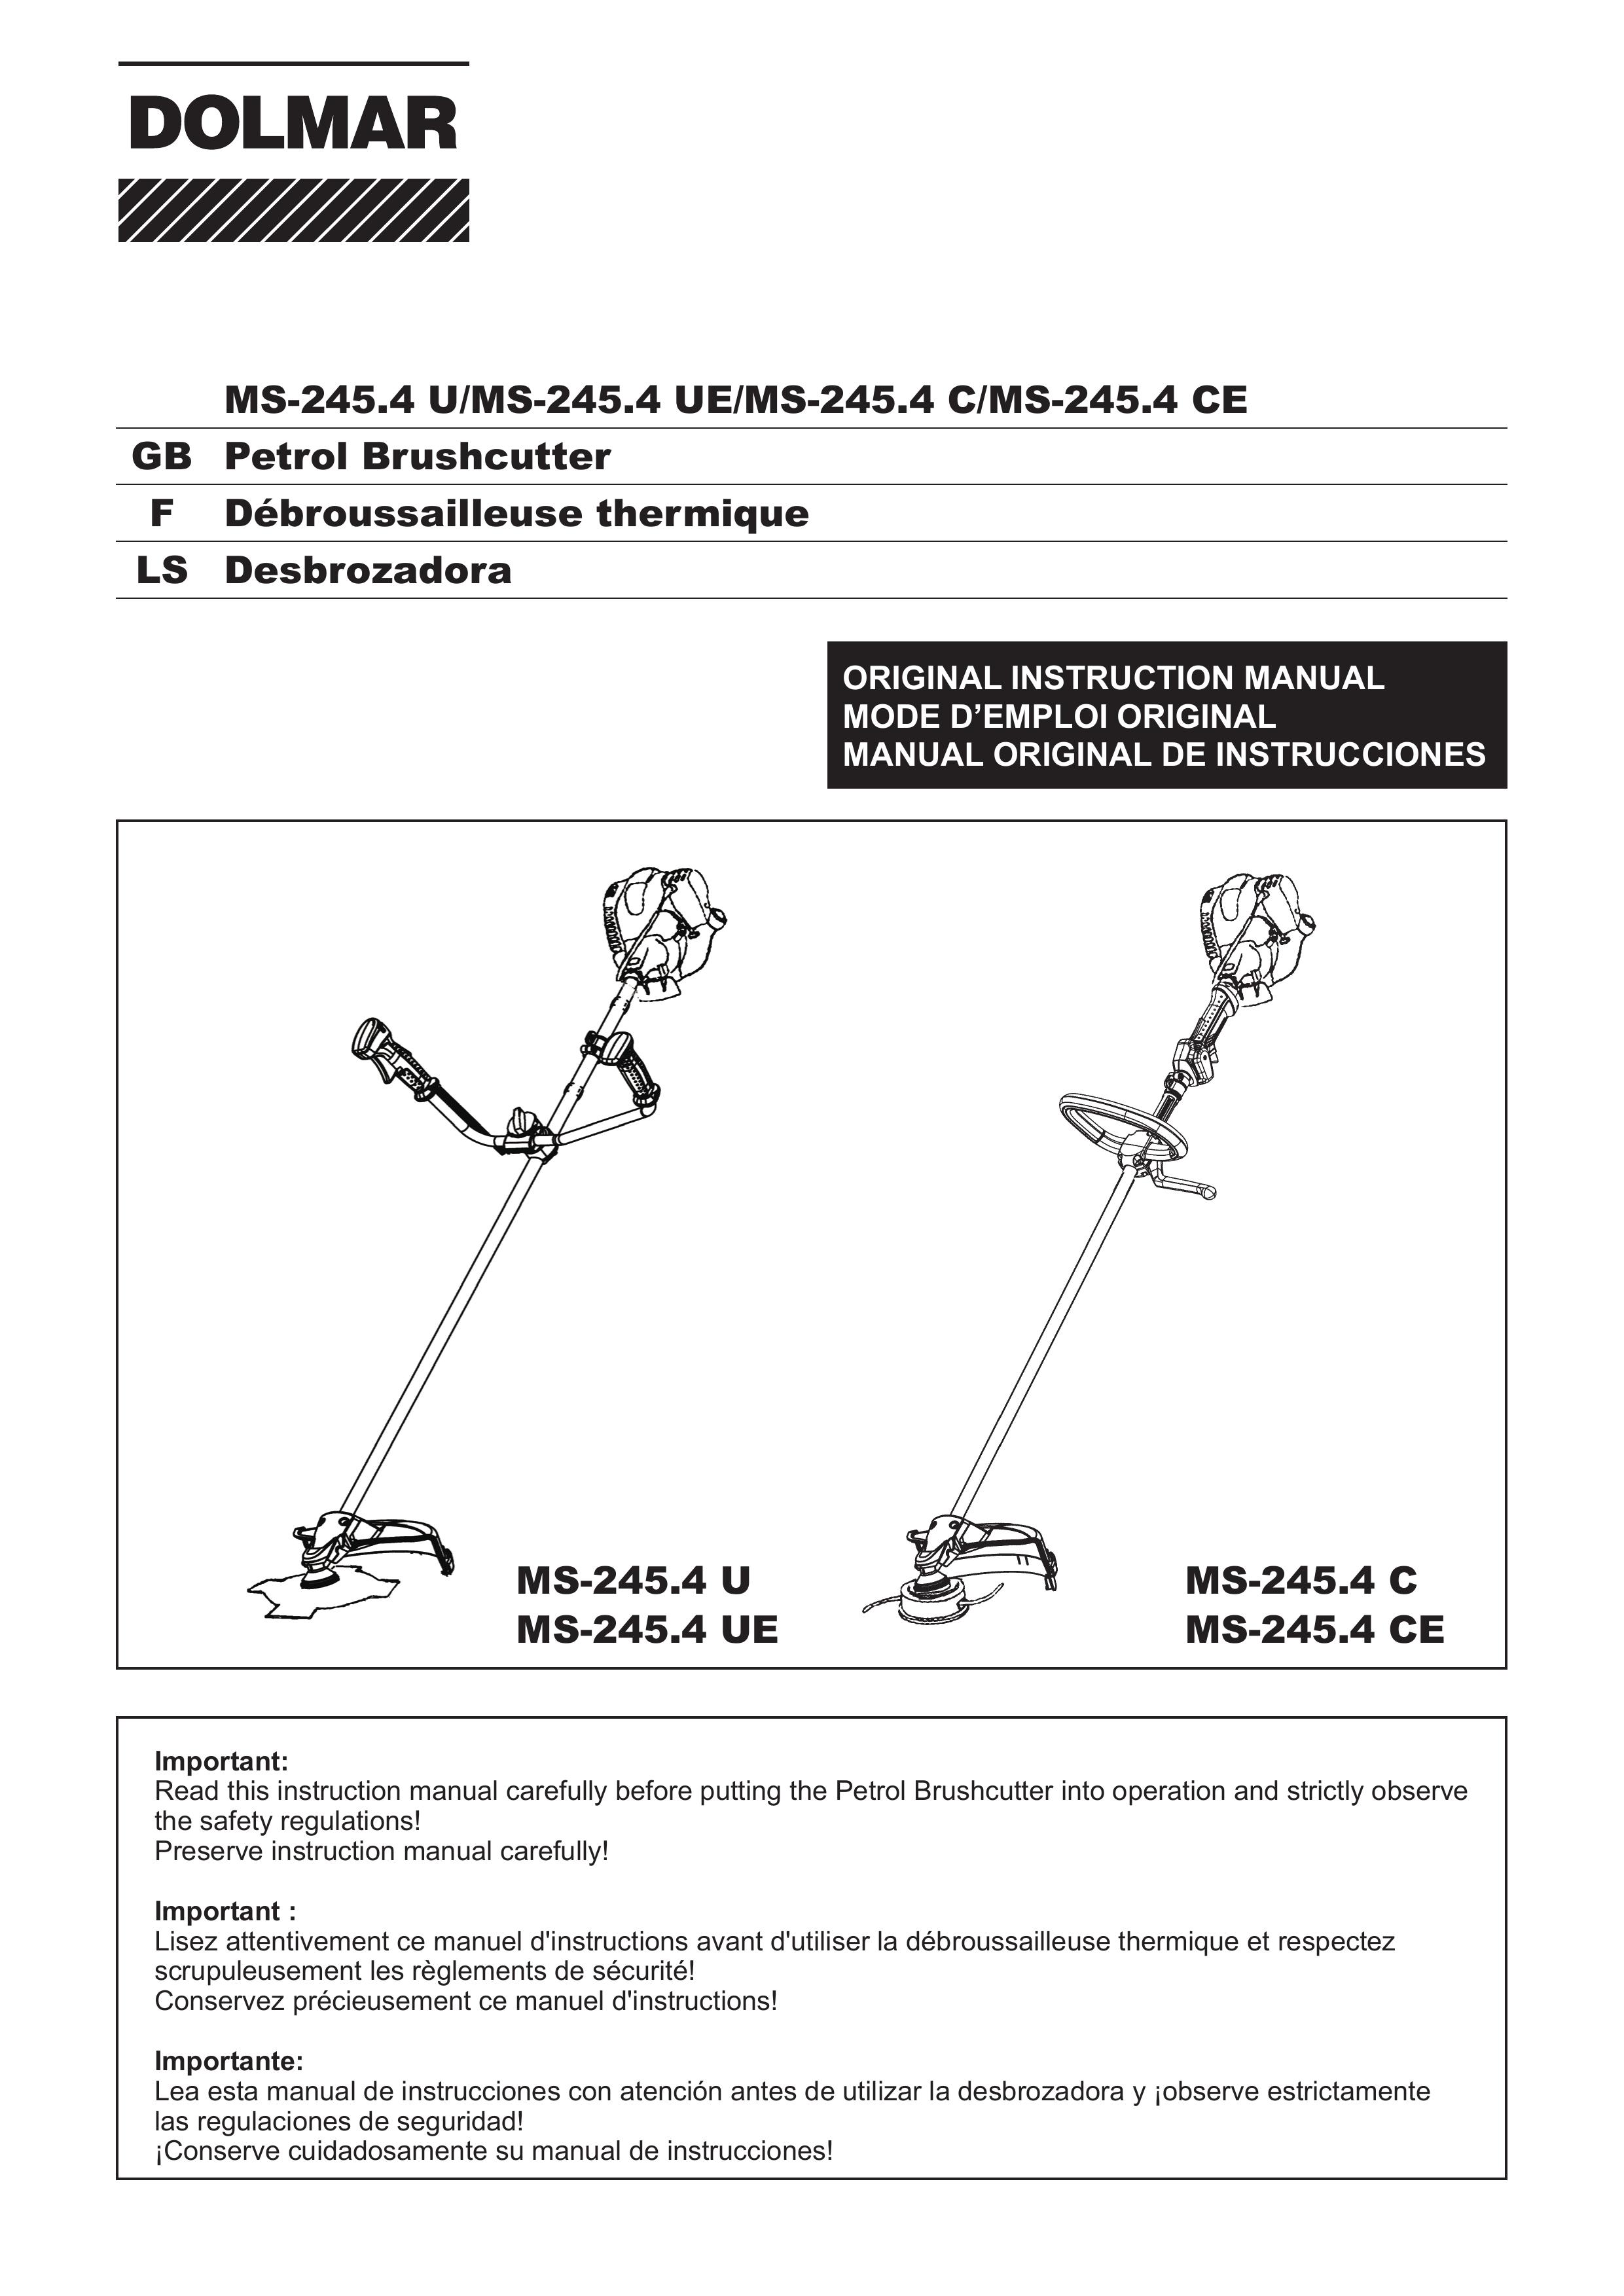 Dolmar MS-245.4 C Brush Cutter User Manual